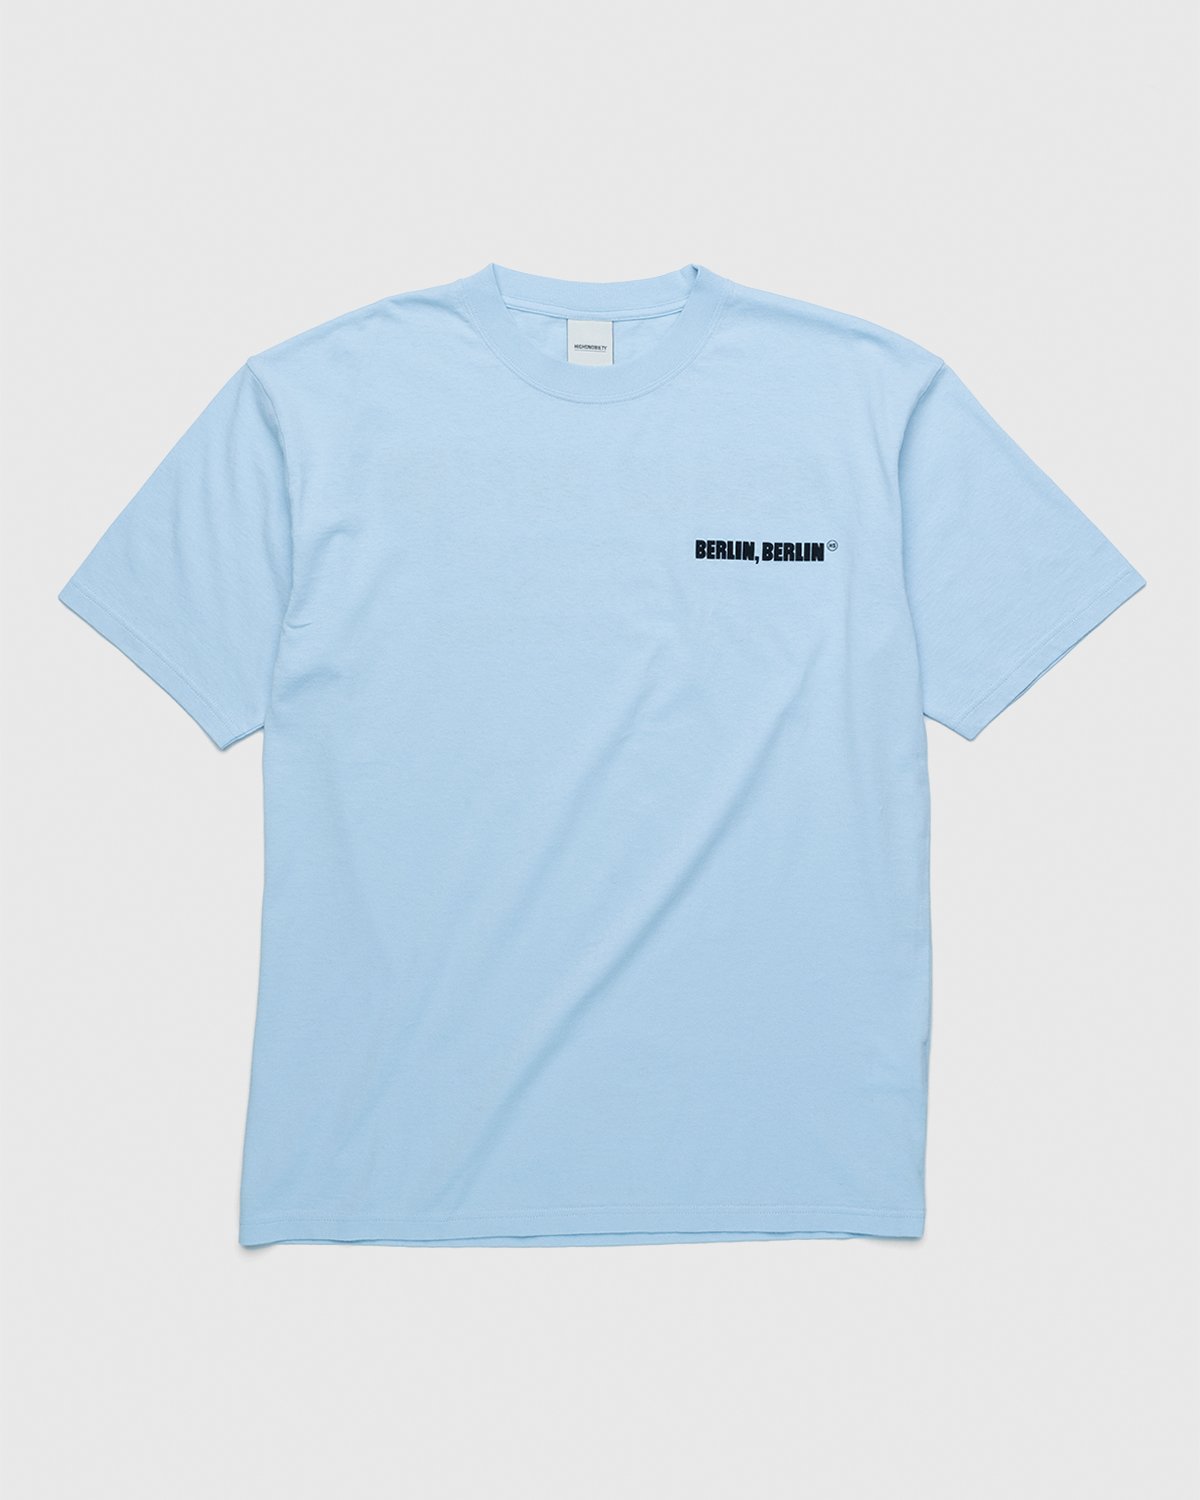 Highsnobiety - Berlin Berlin 2 T-Shirt Blue - Clothing - Blue - Image 2